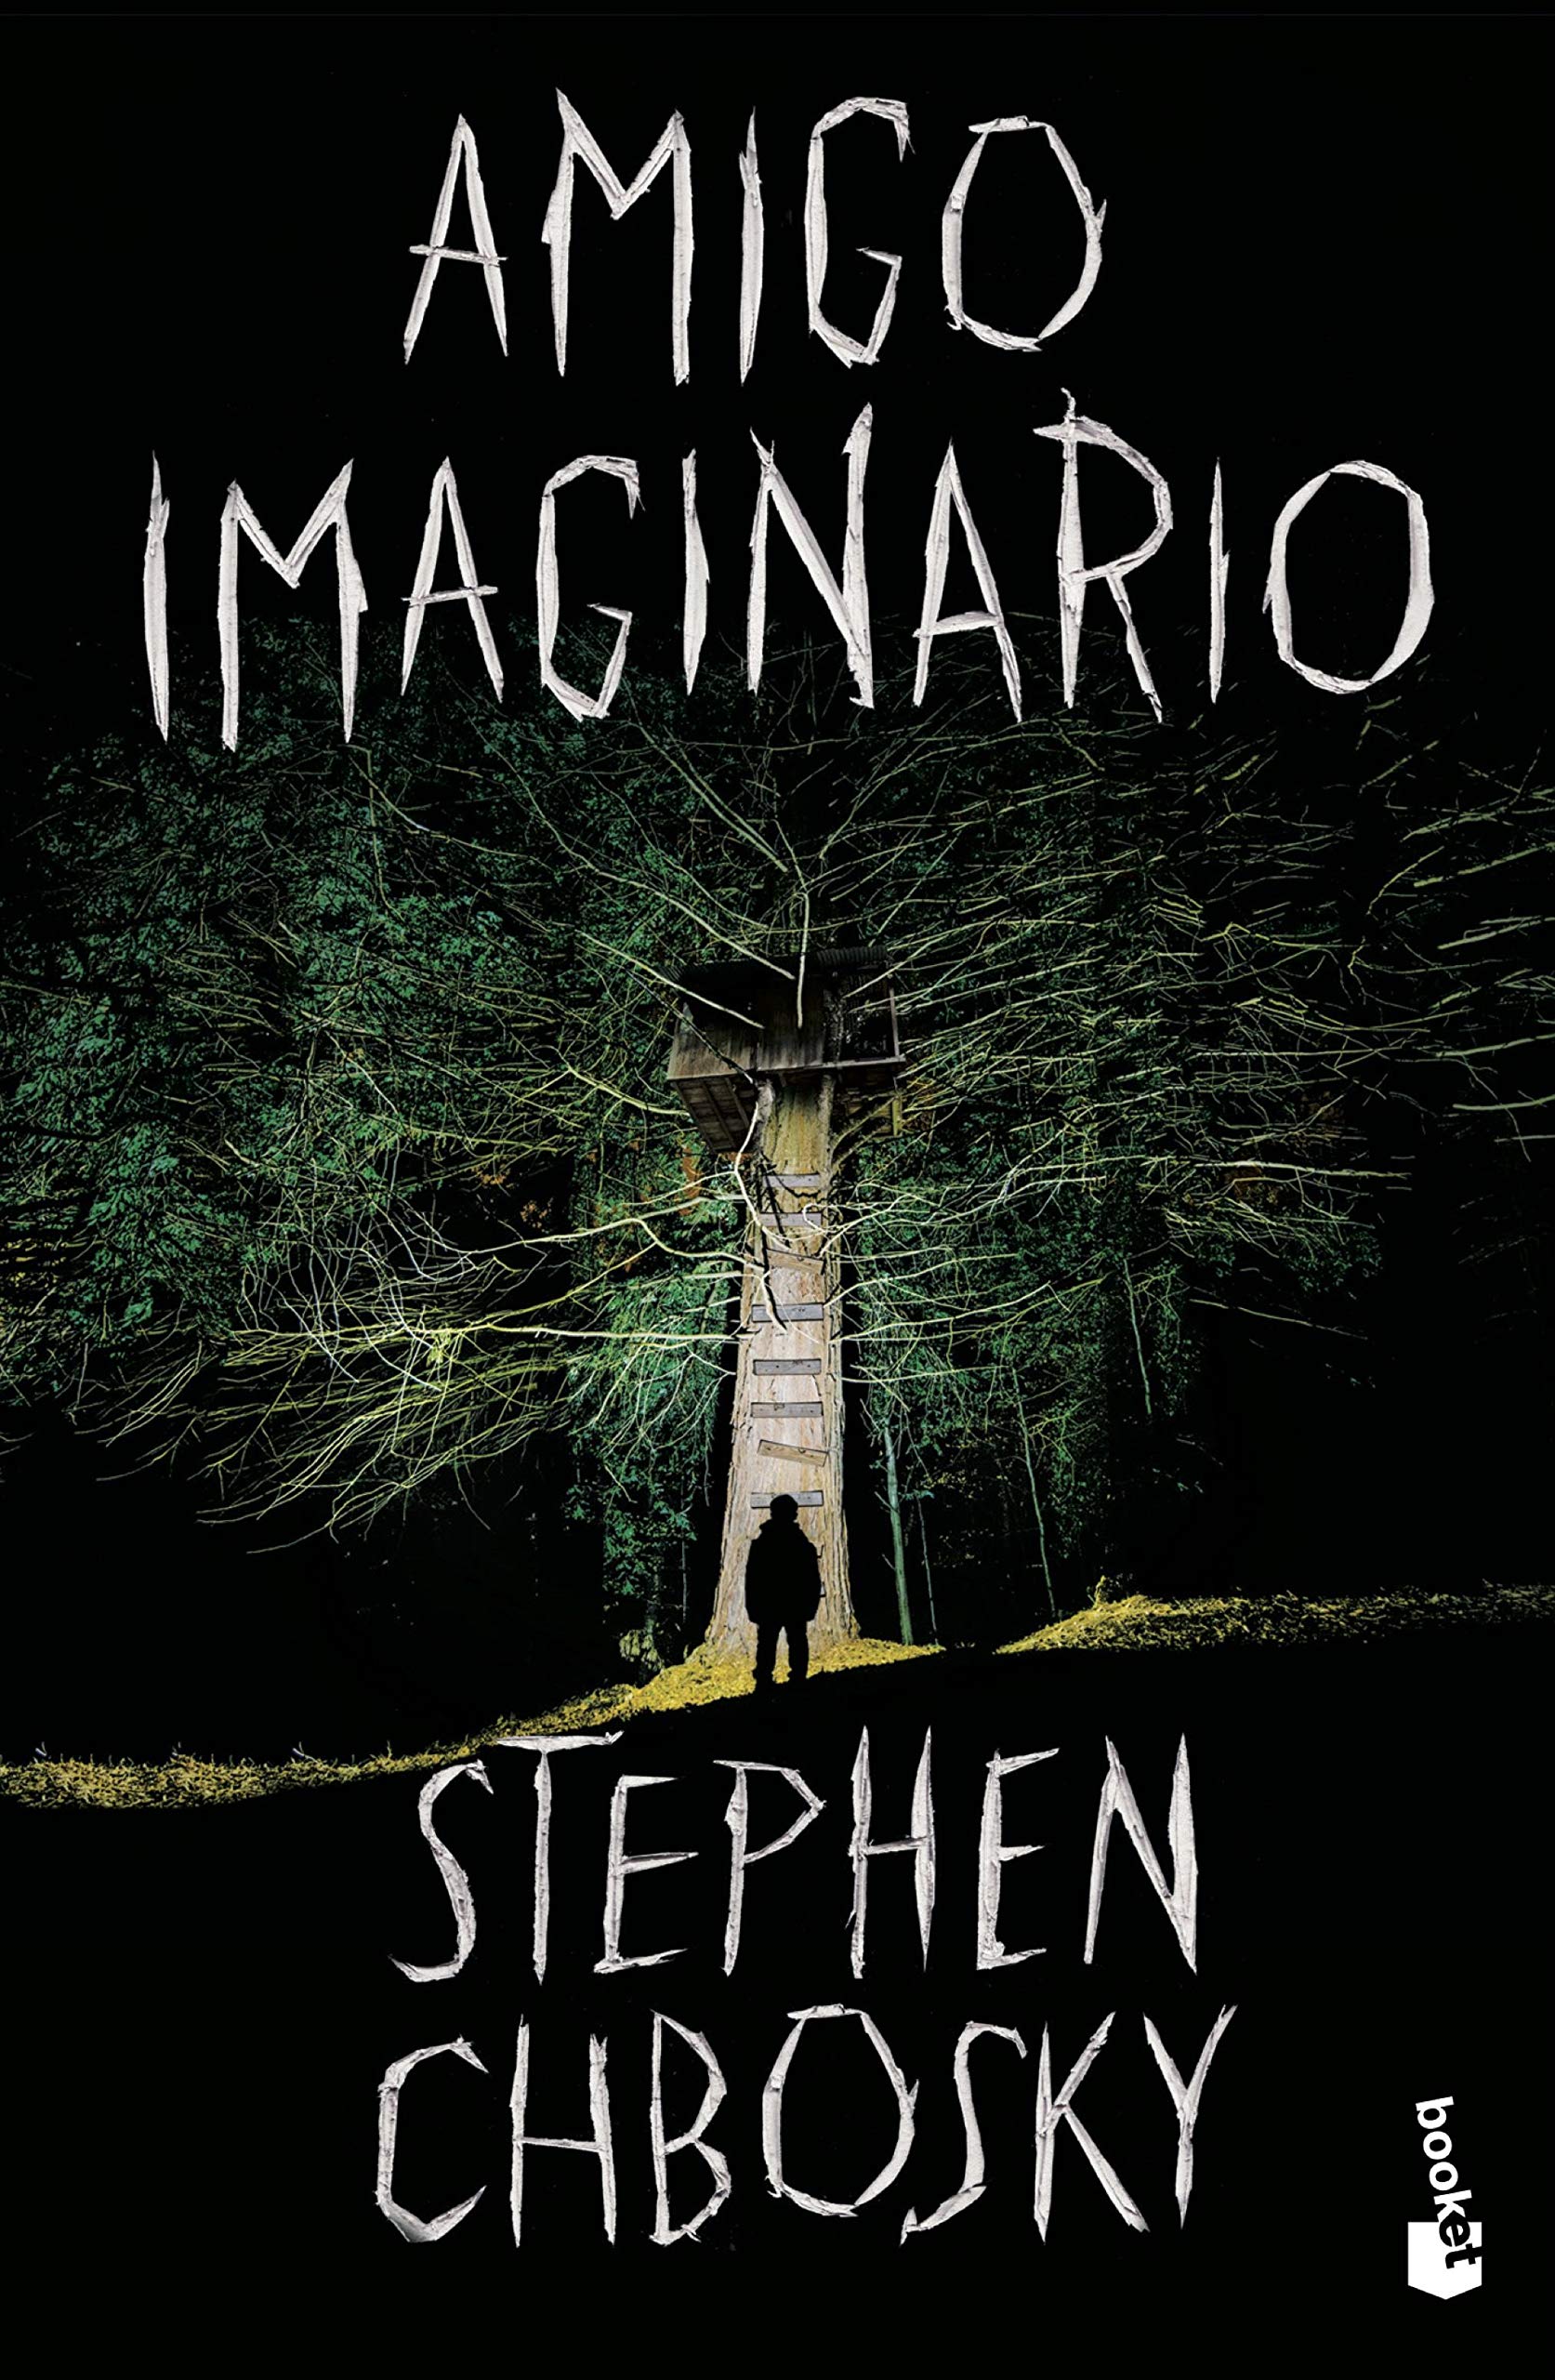 Amigo imaginario | Stephen Chbosky